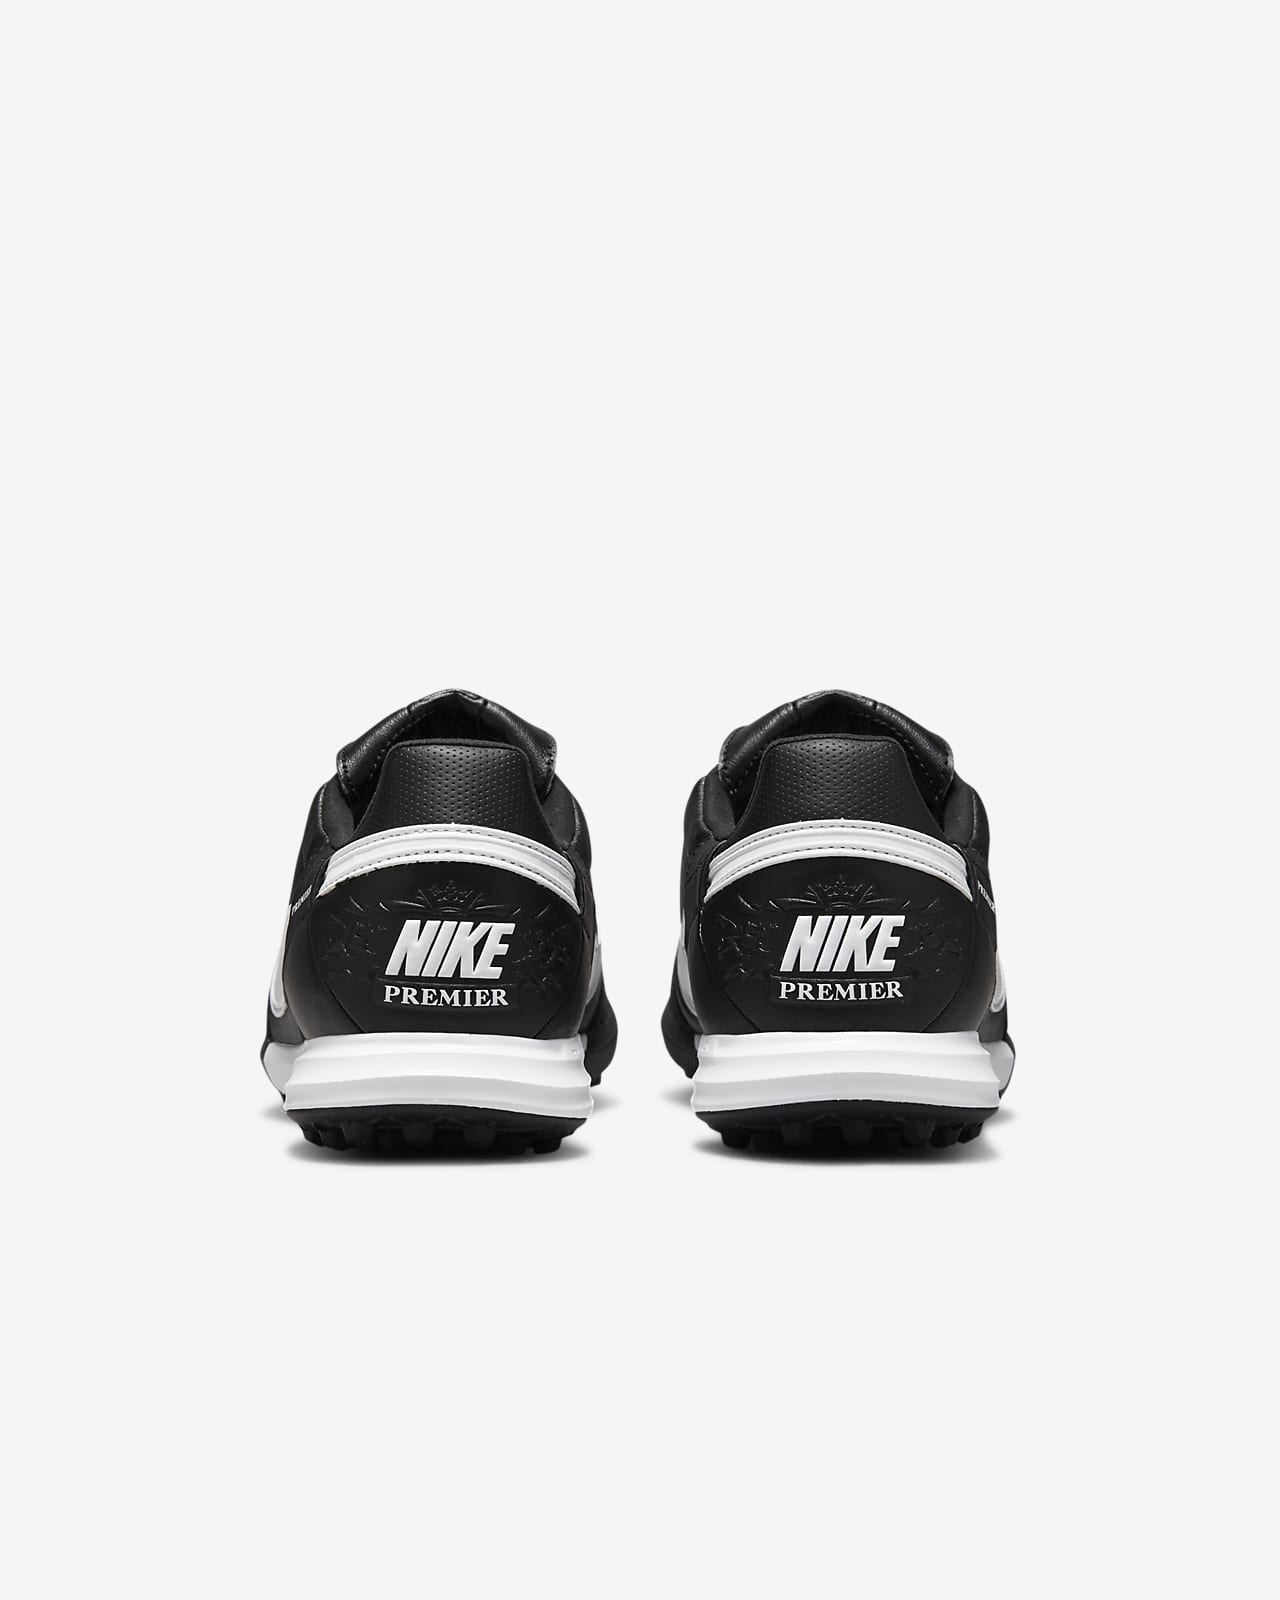 Justitie Beschrijven Belastingbetaler The Nike Premier 3 TF Artificial-Turf Soccer Shoes. Nike.com